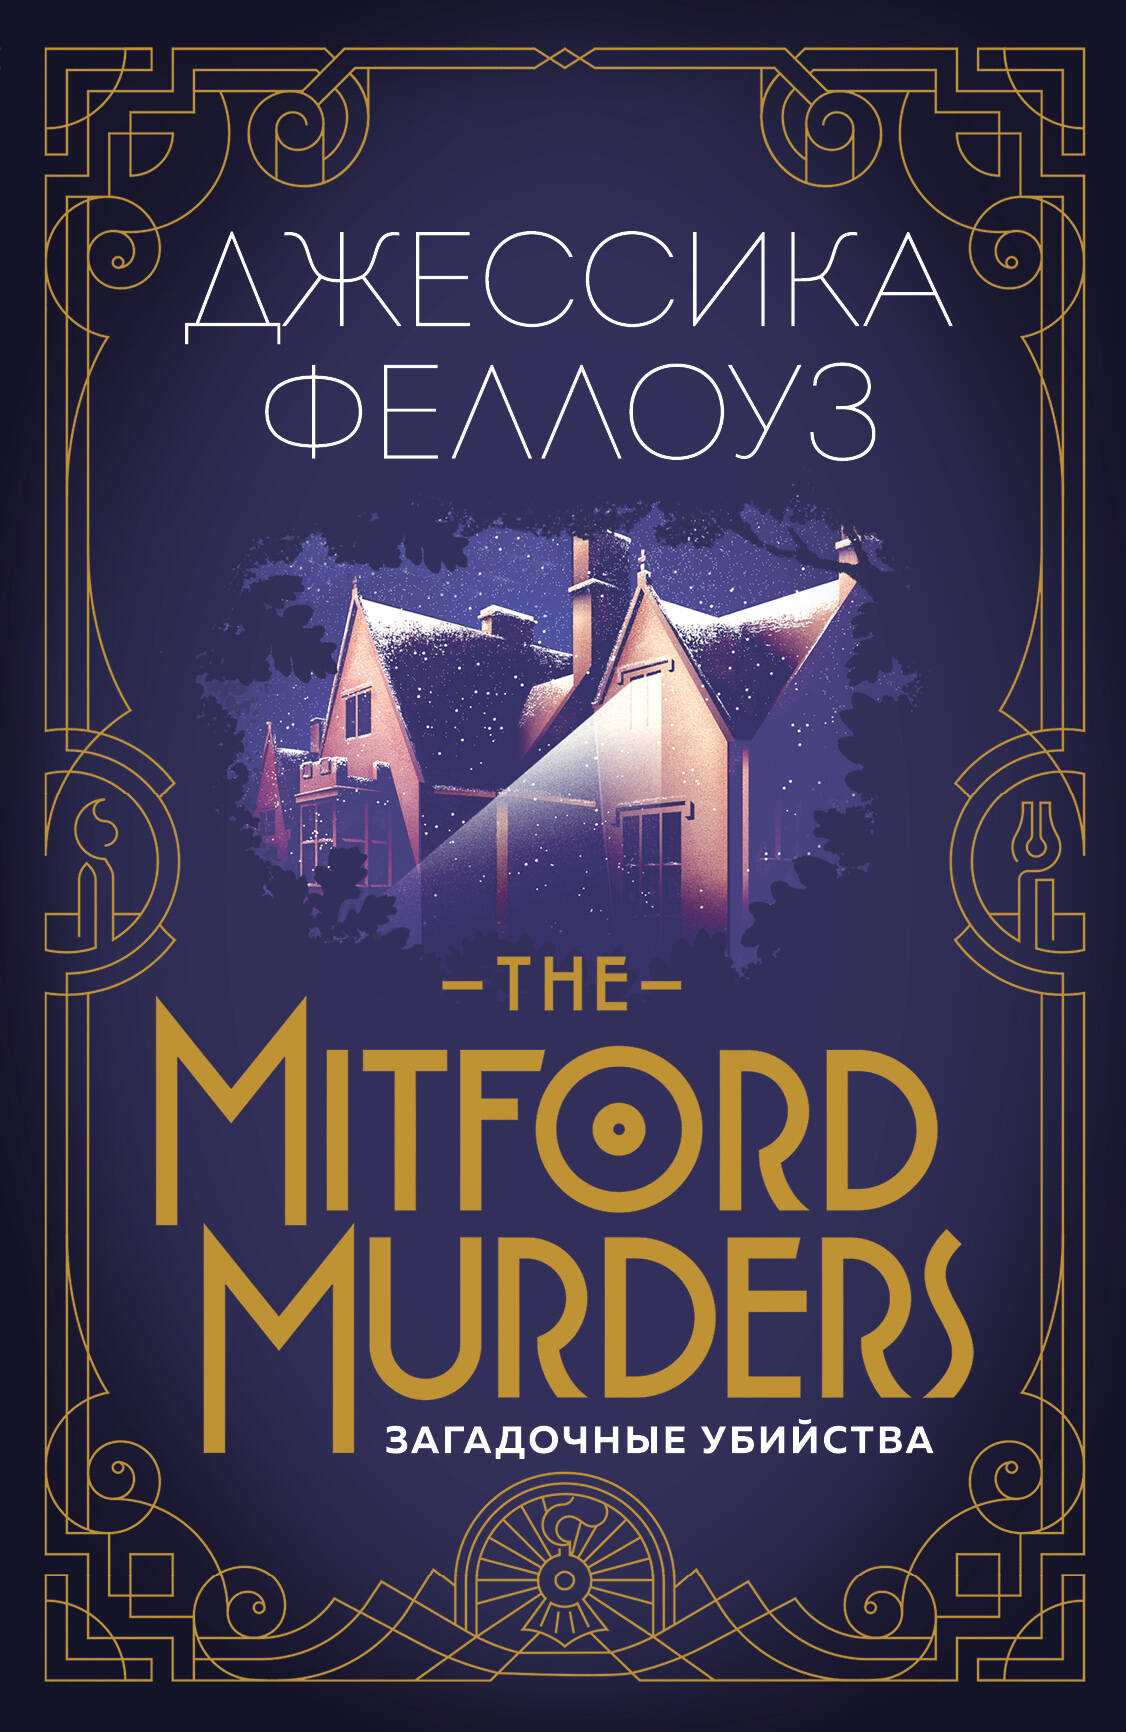 the mitford murders загадочные убийства феллоуз дж Феллоуз Джессика The Mitford murders. Загадочные убийства